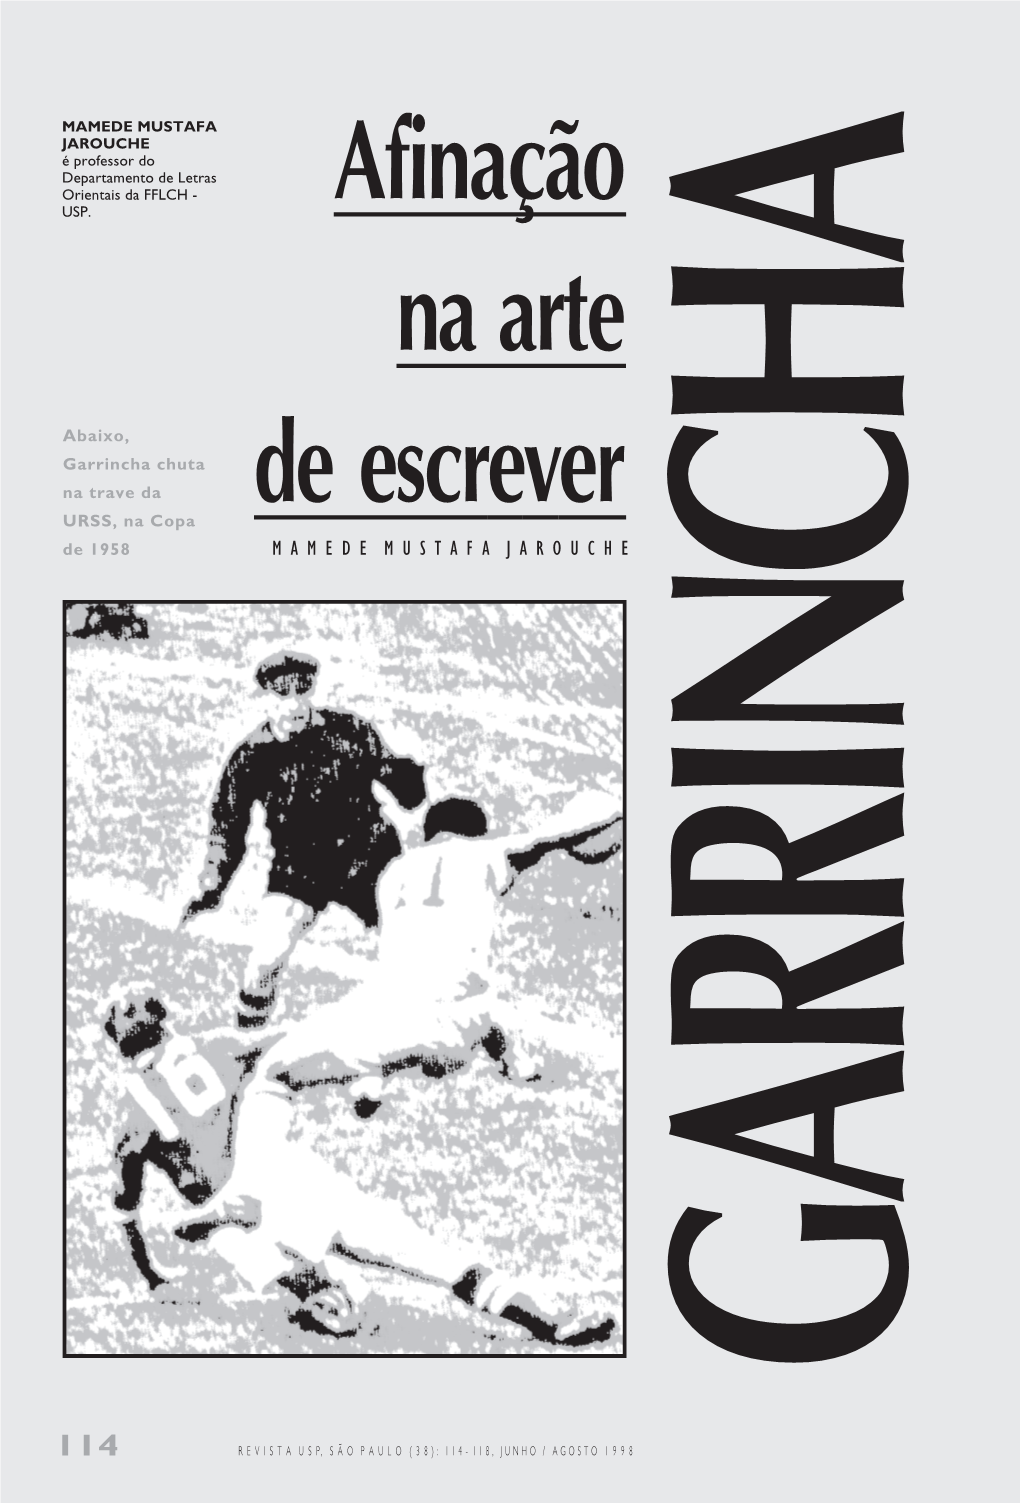 Garrincha Chuta Na Trave Da URSS, Na Copa De Escrever De 1958 M a M E D E M U S T a F a J a R O U C H E